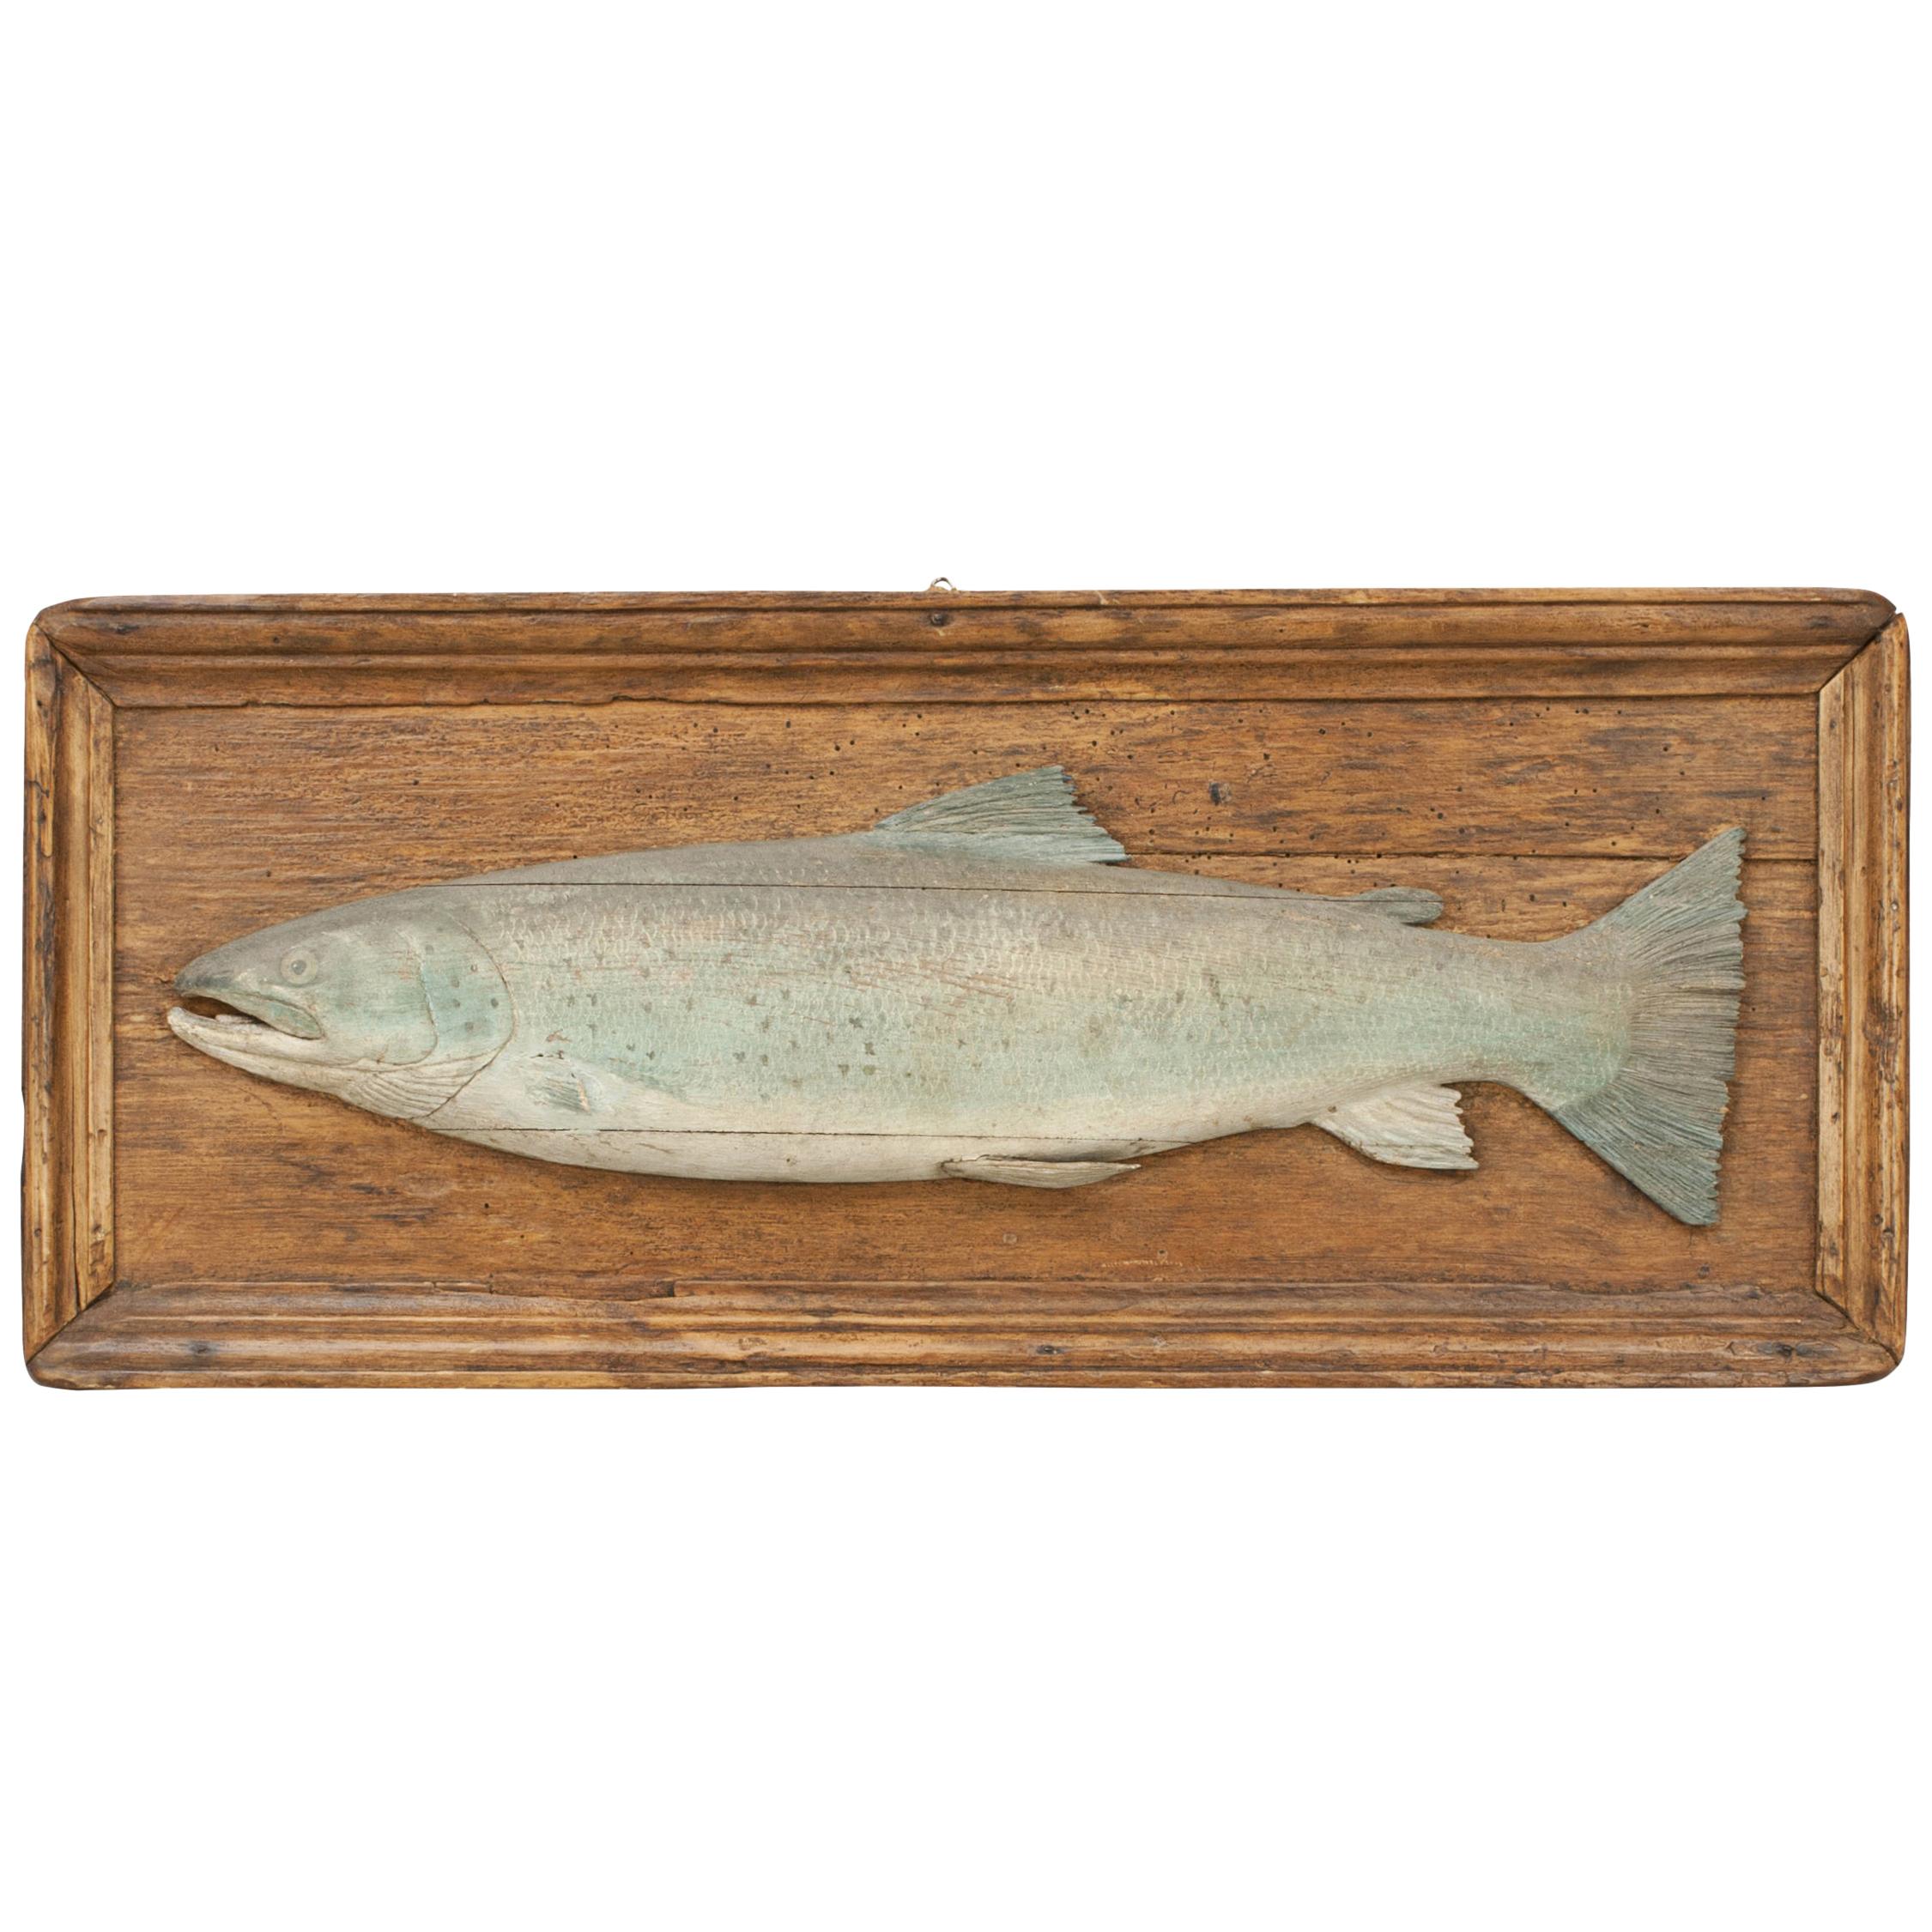 Antique Carved Fish Model, Lochaber Scotland